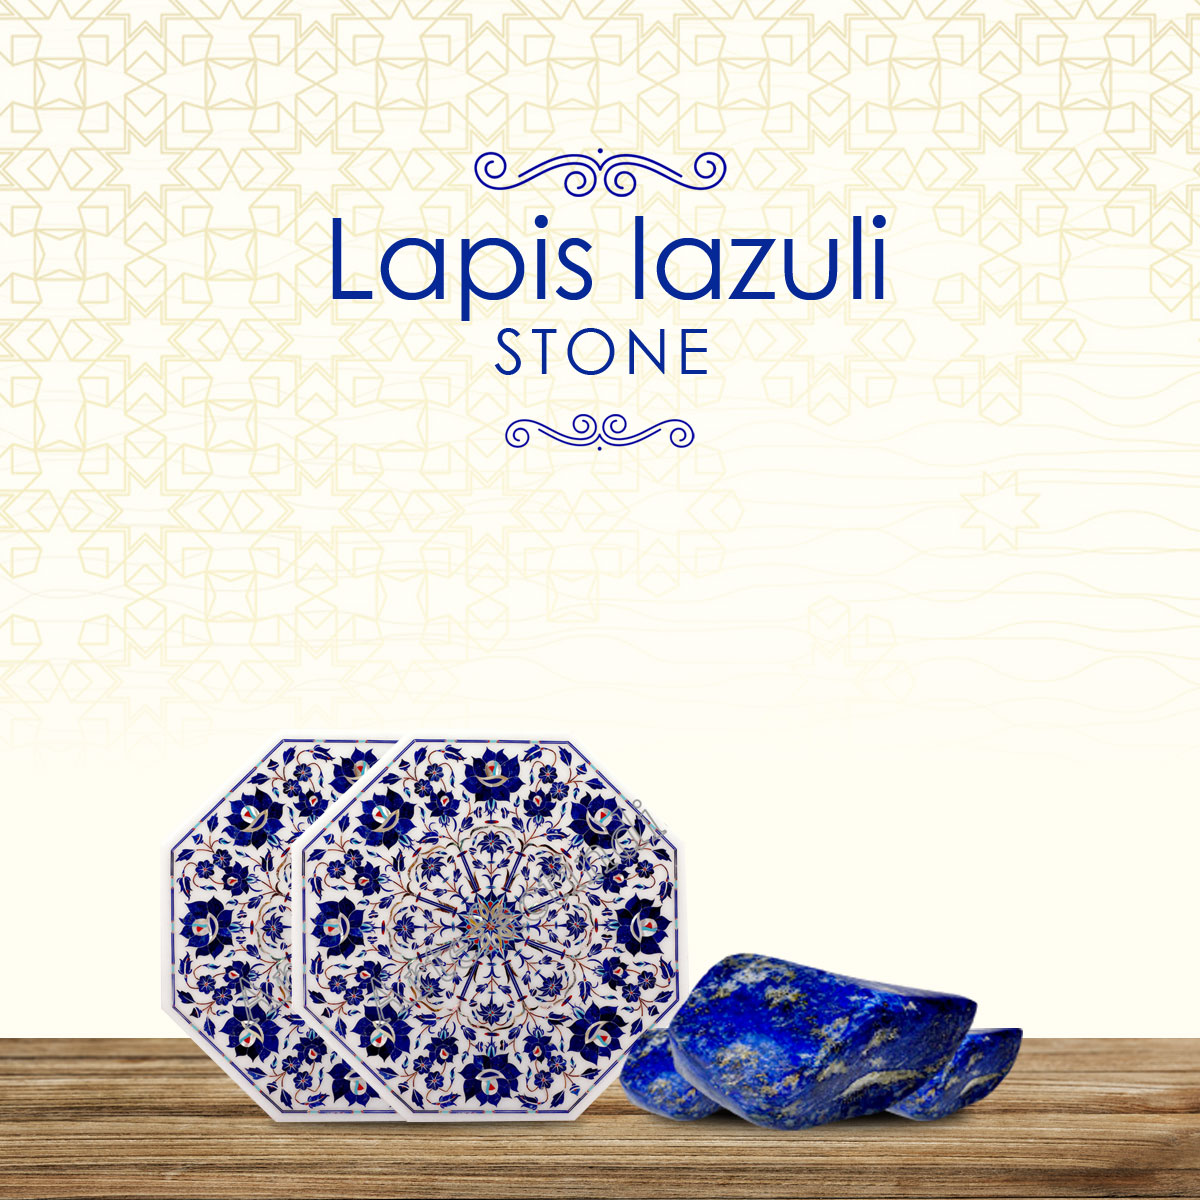 What is Lapis lazuli ?